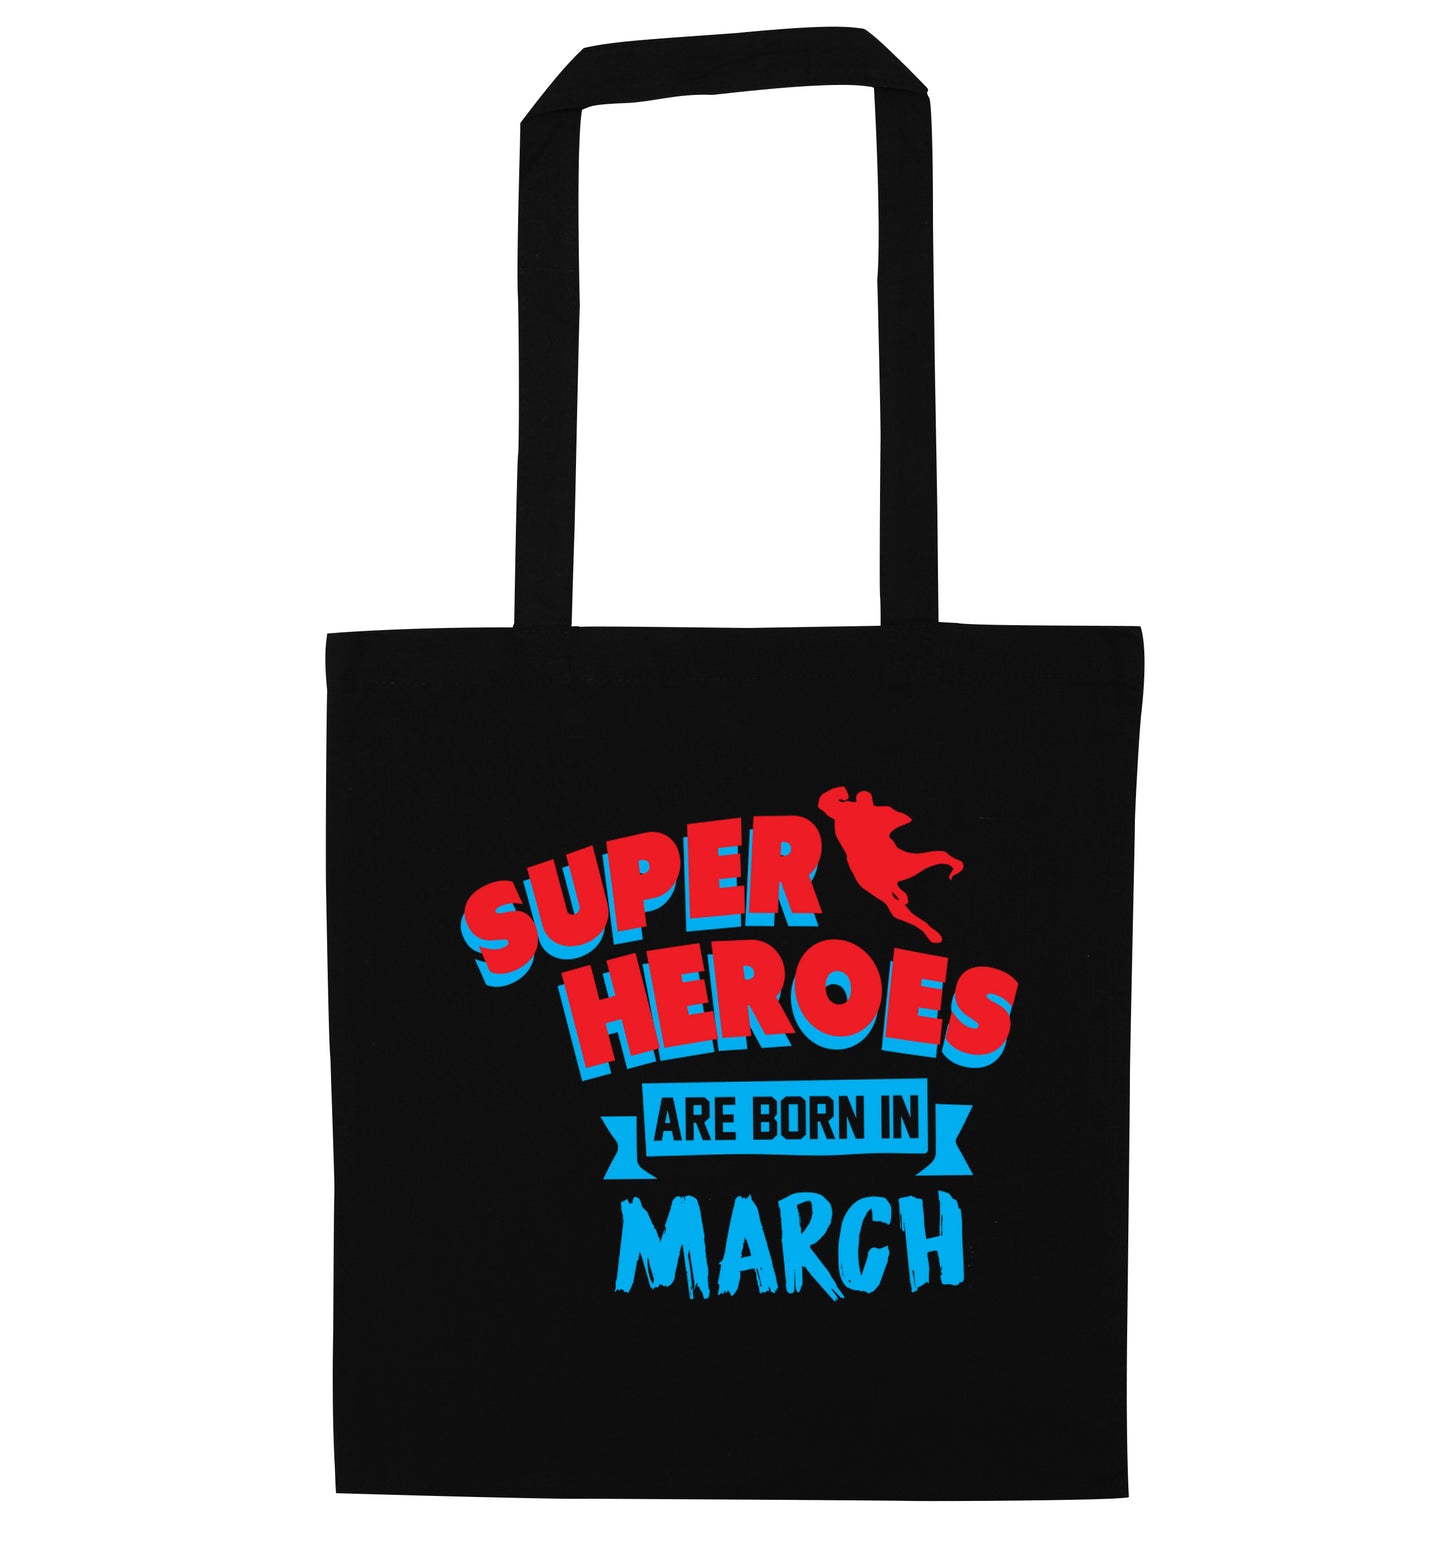 Superheros are born in March black tote bag